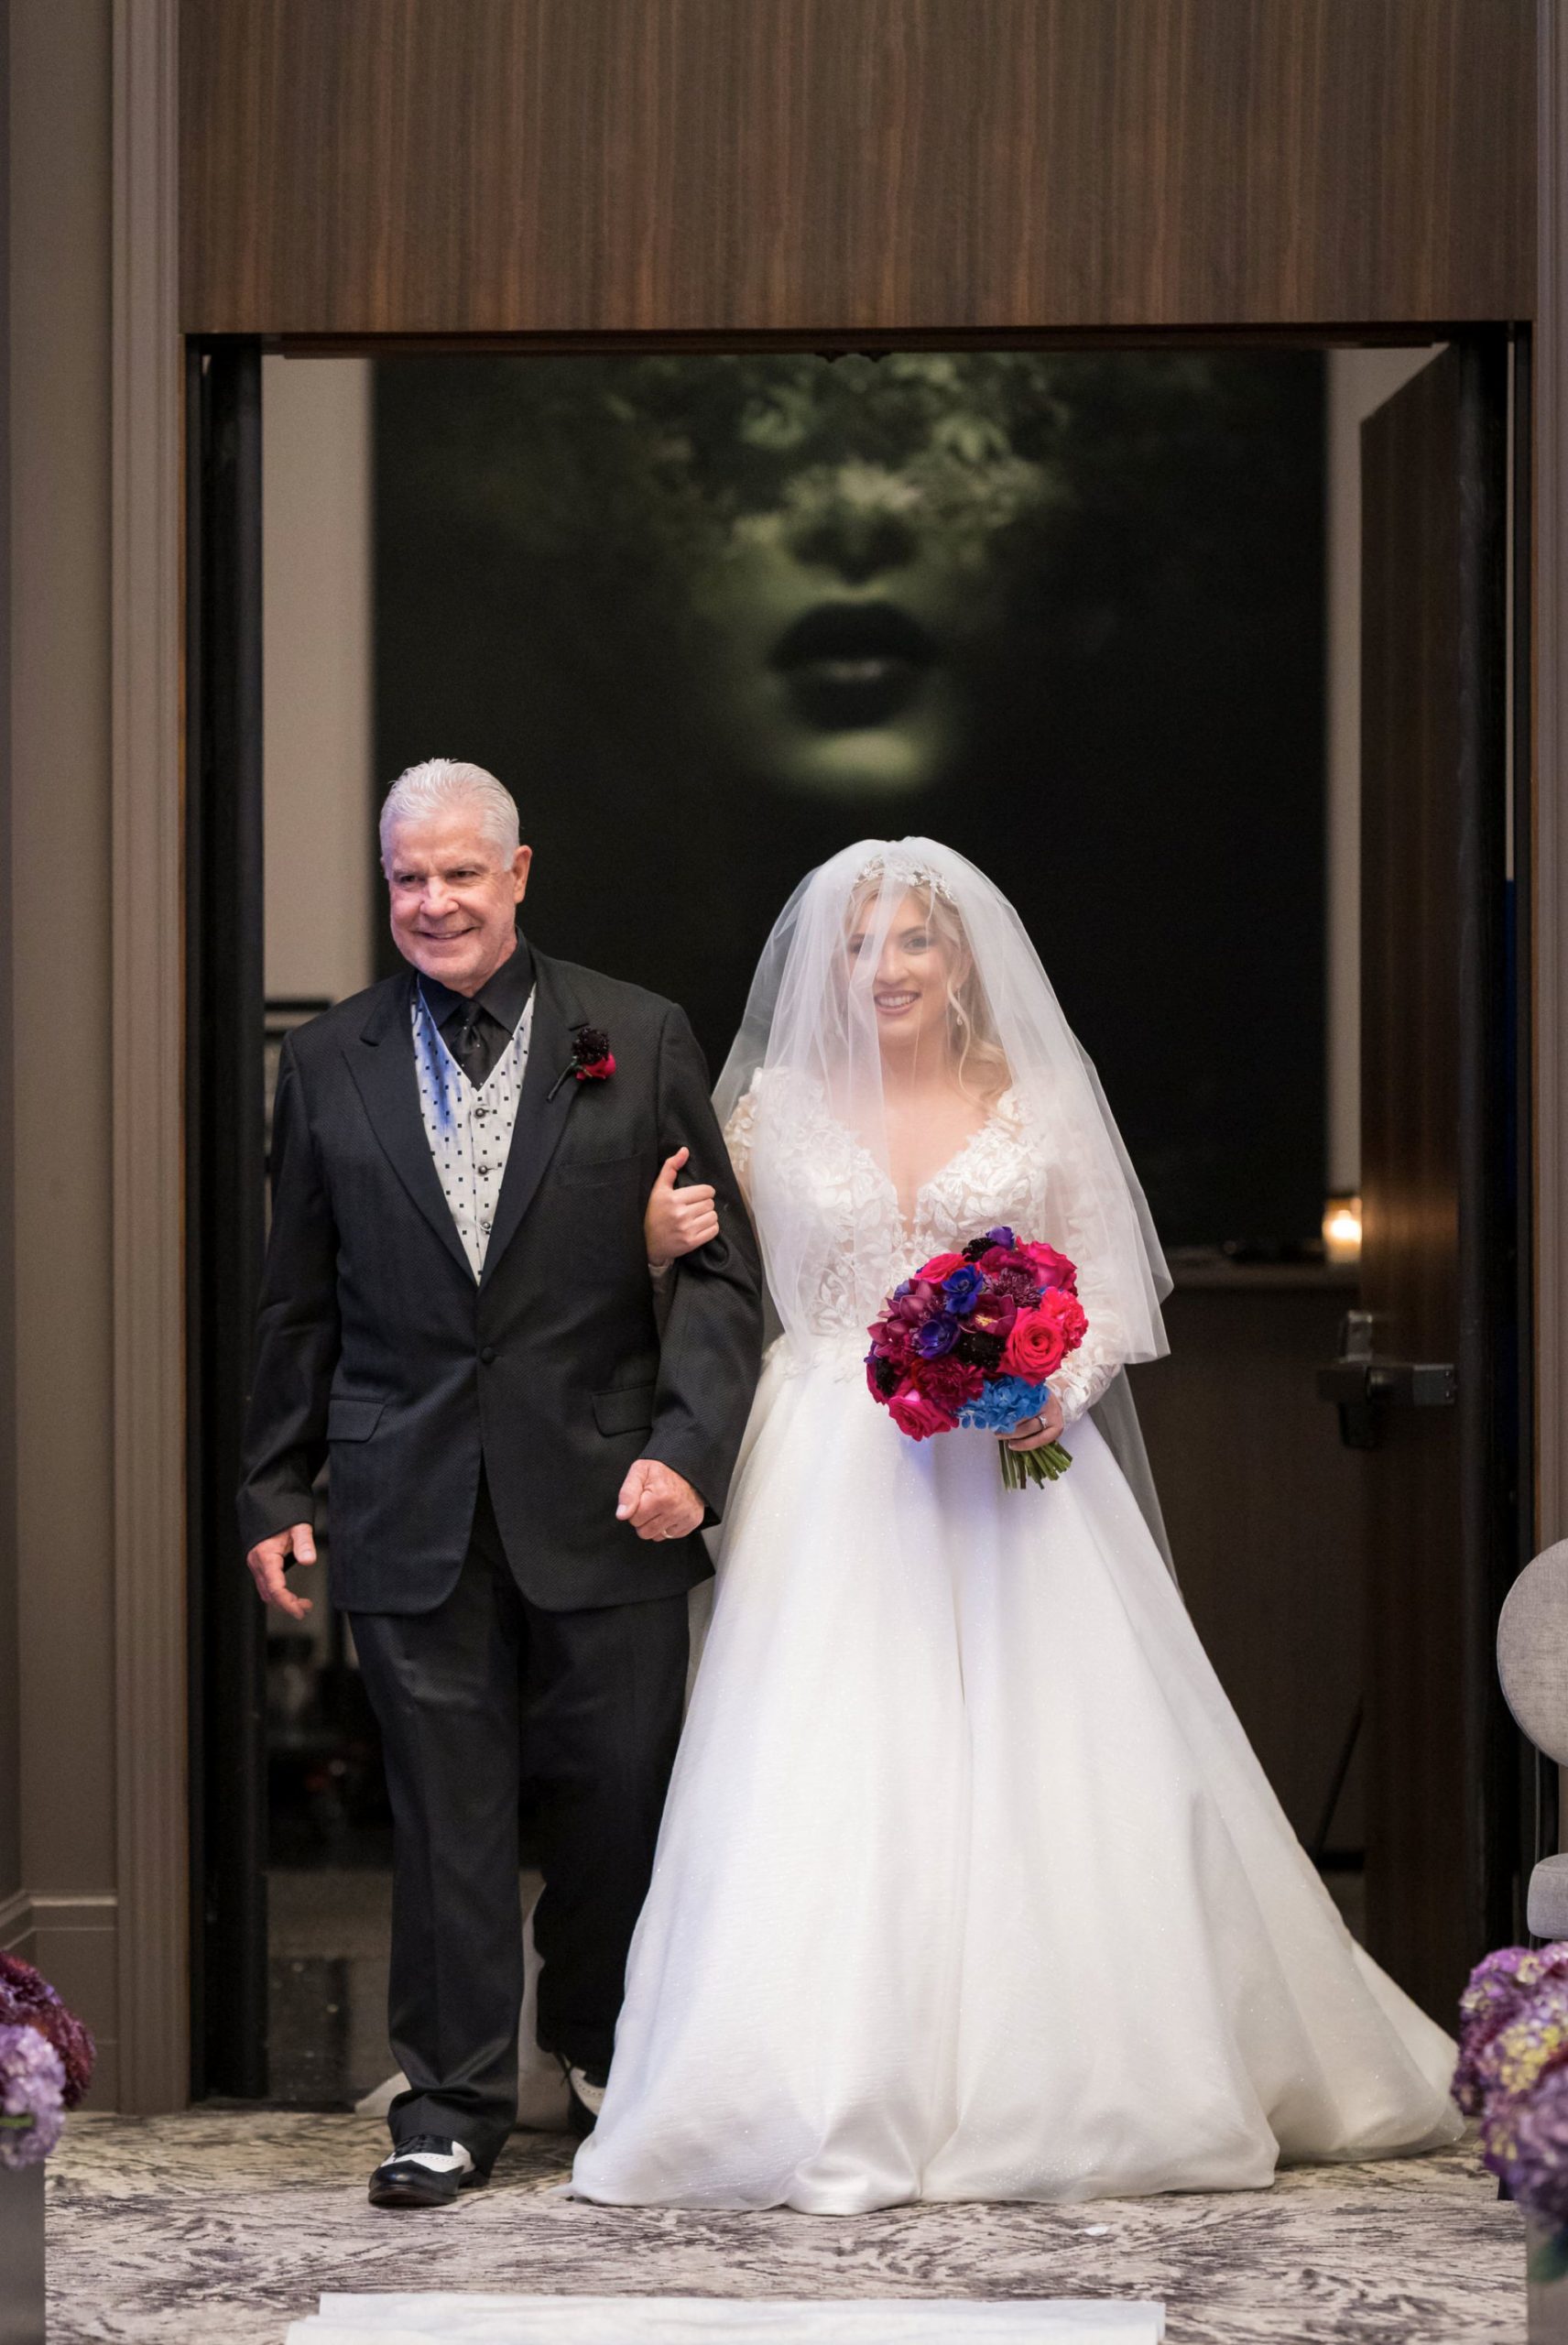 A bride enters the ballroom of her Daxton Hotel wedding.  